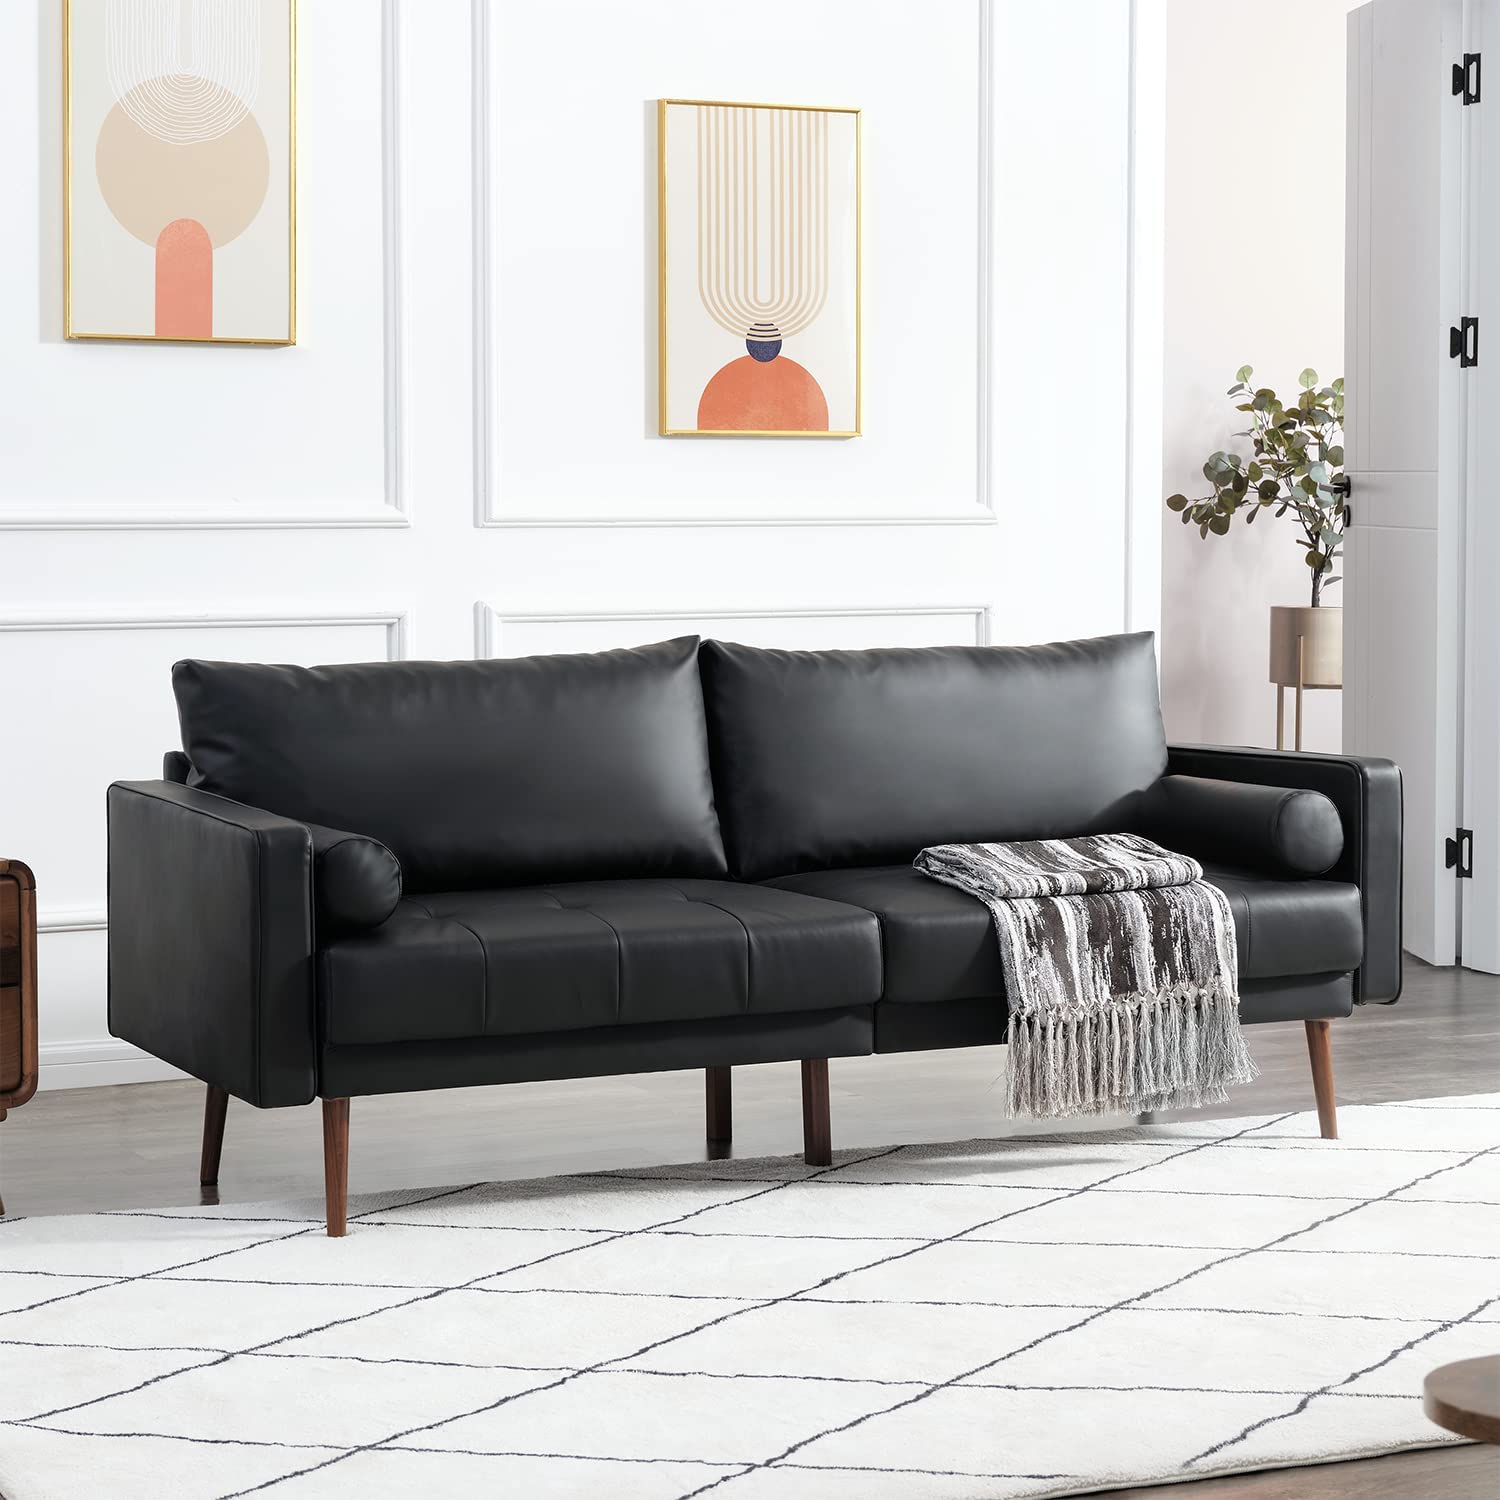 Vonanda Sofa Embellishes a Better Life